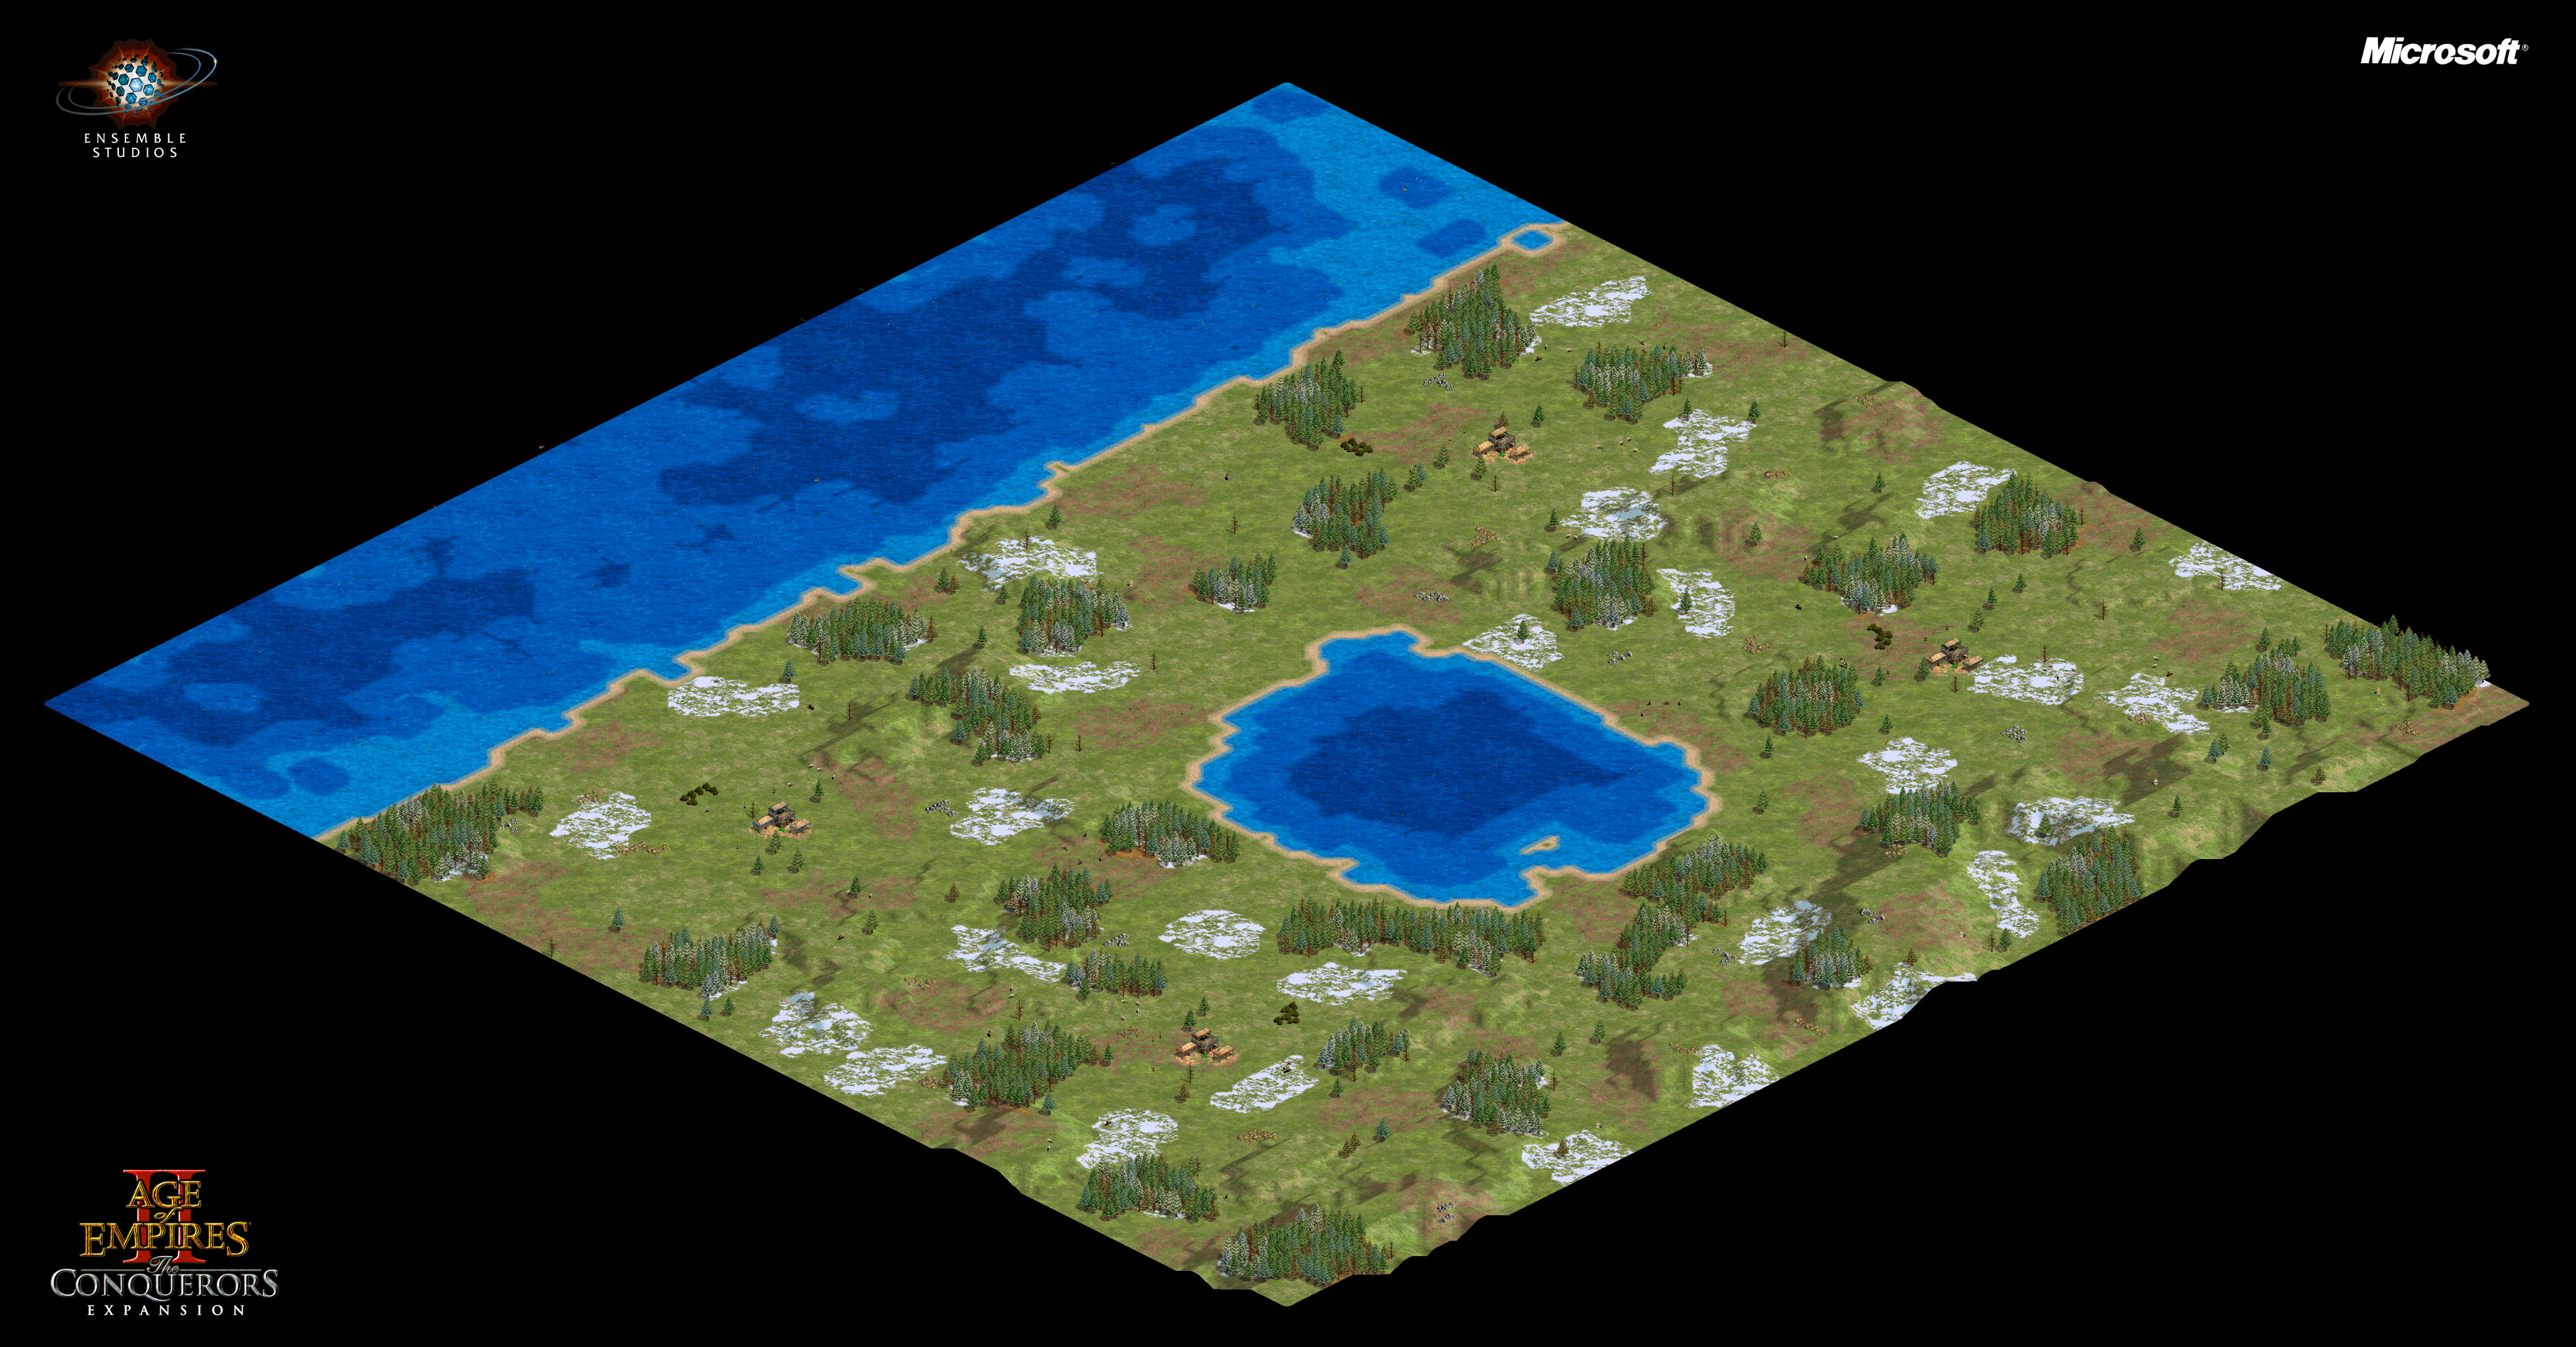 MAP102.jpg